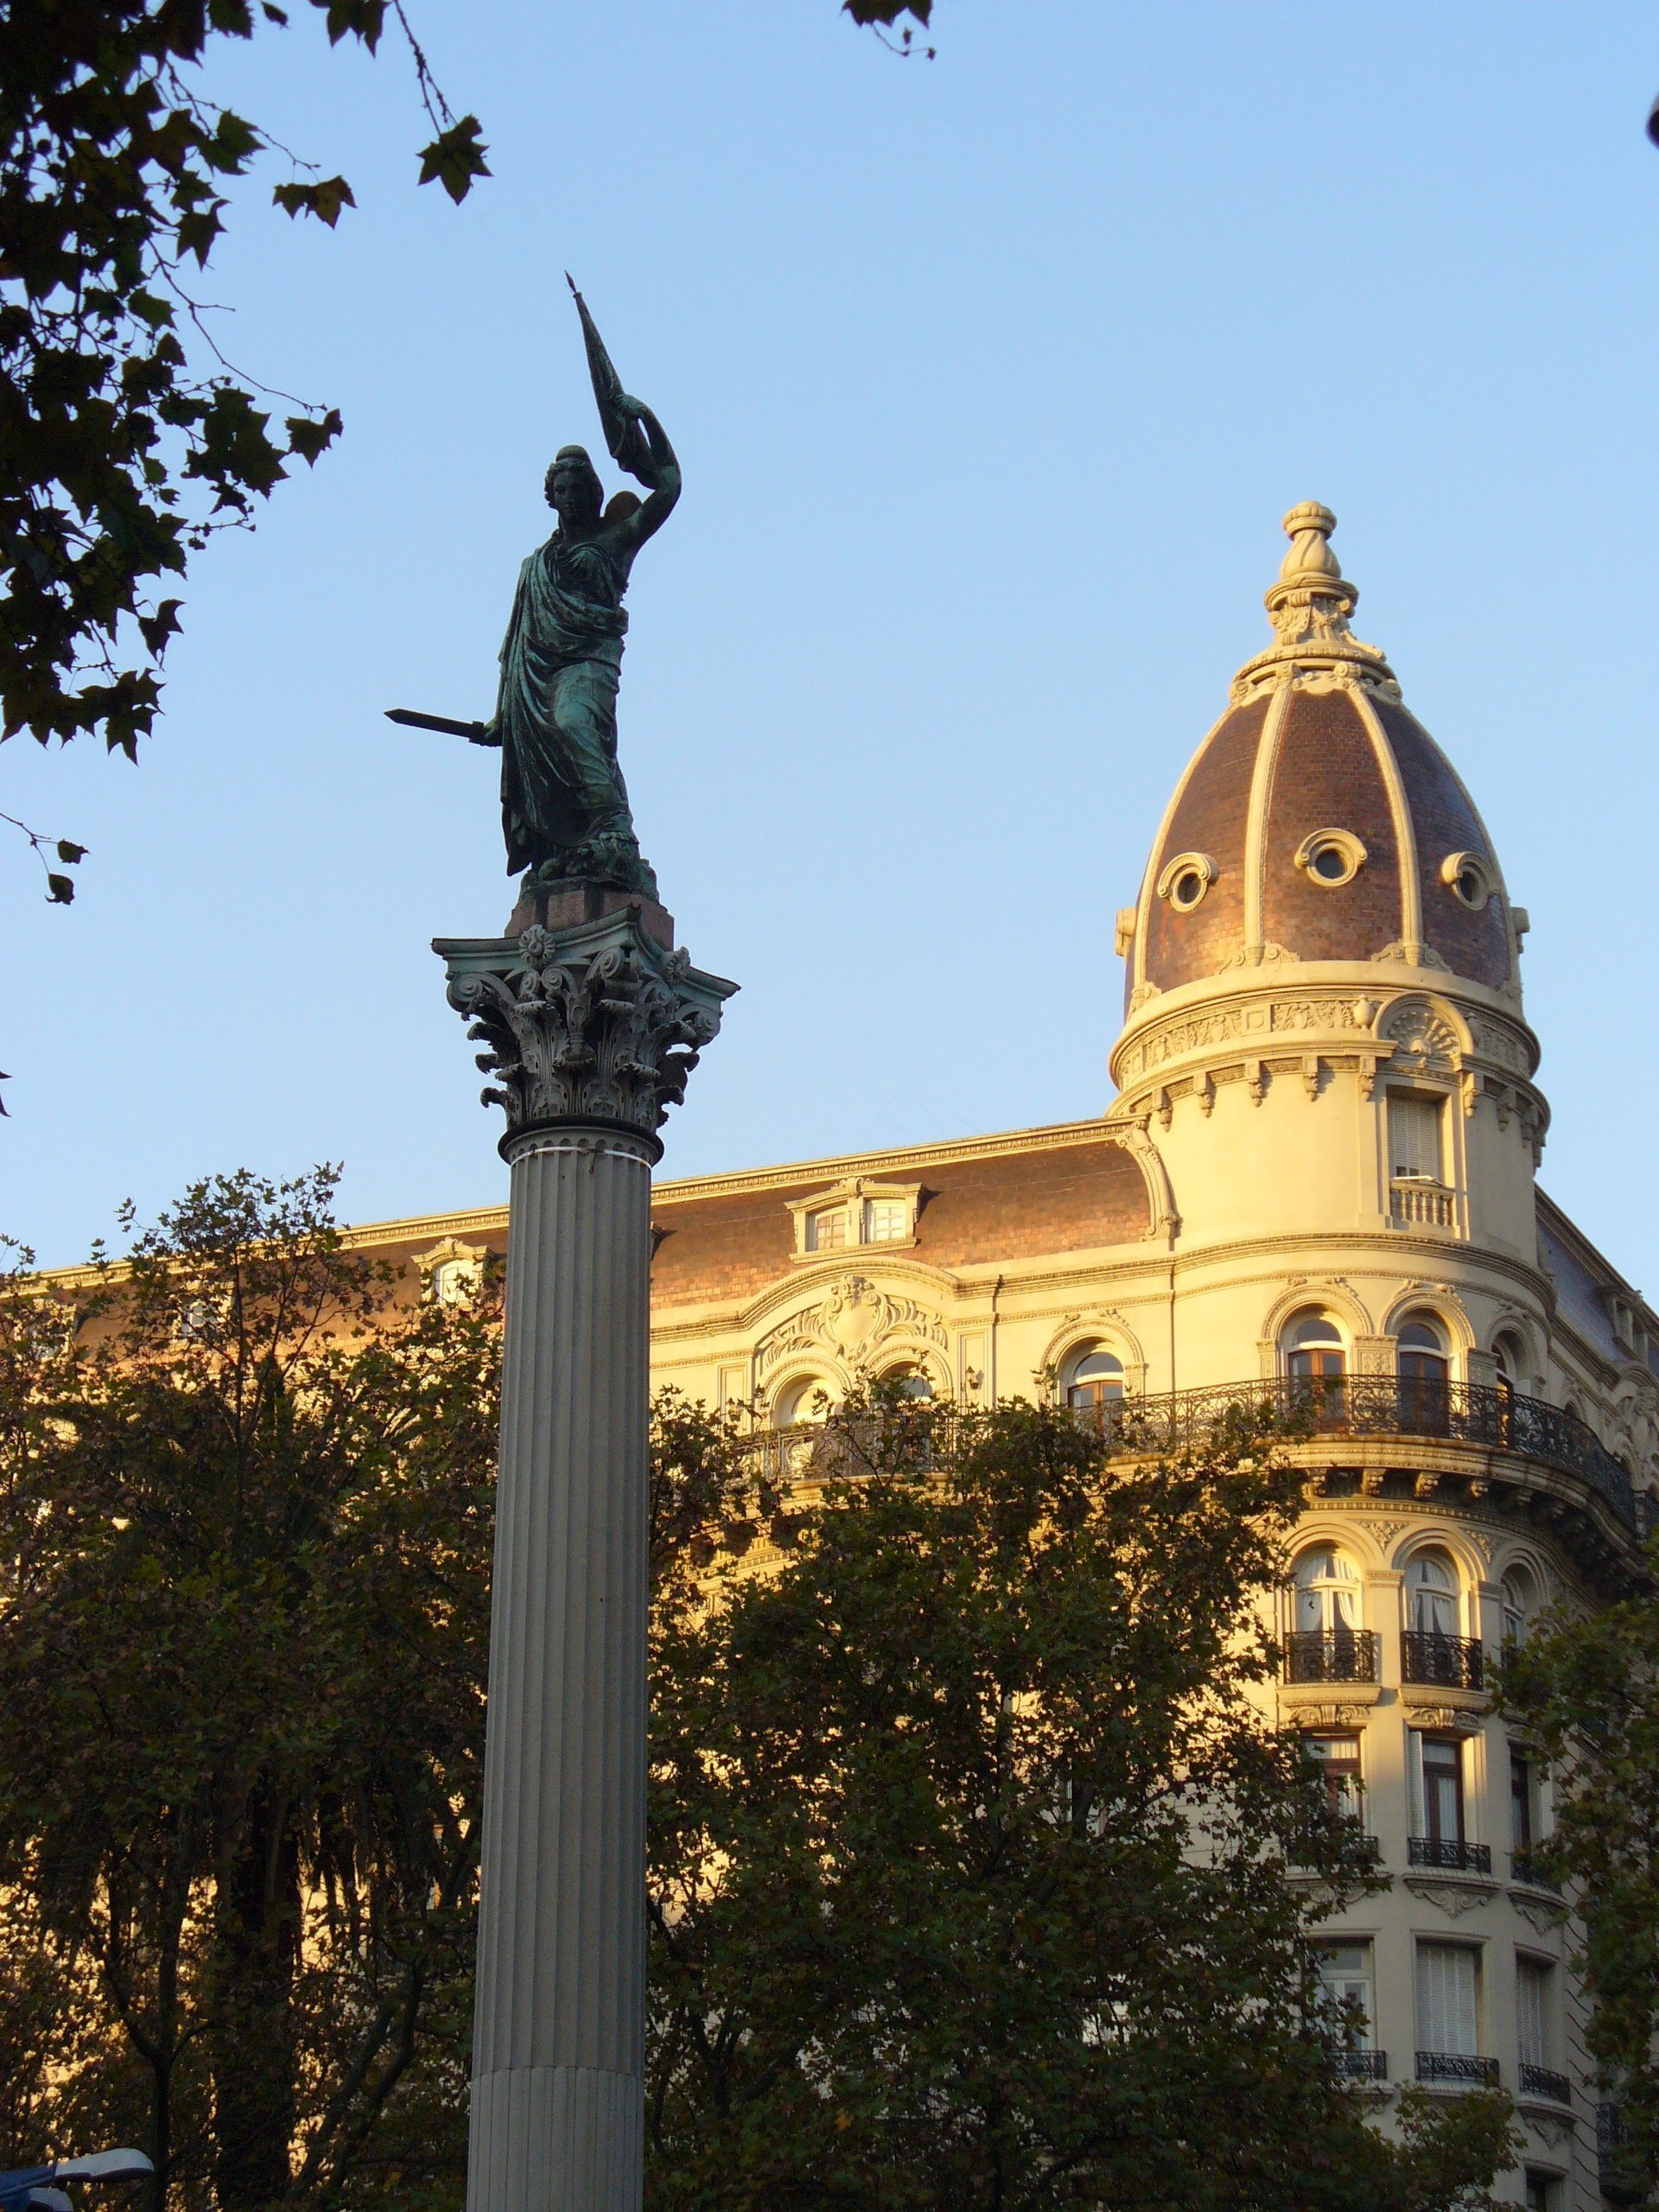 Uruguay's Statue of Liberty